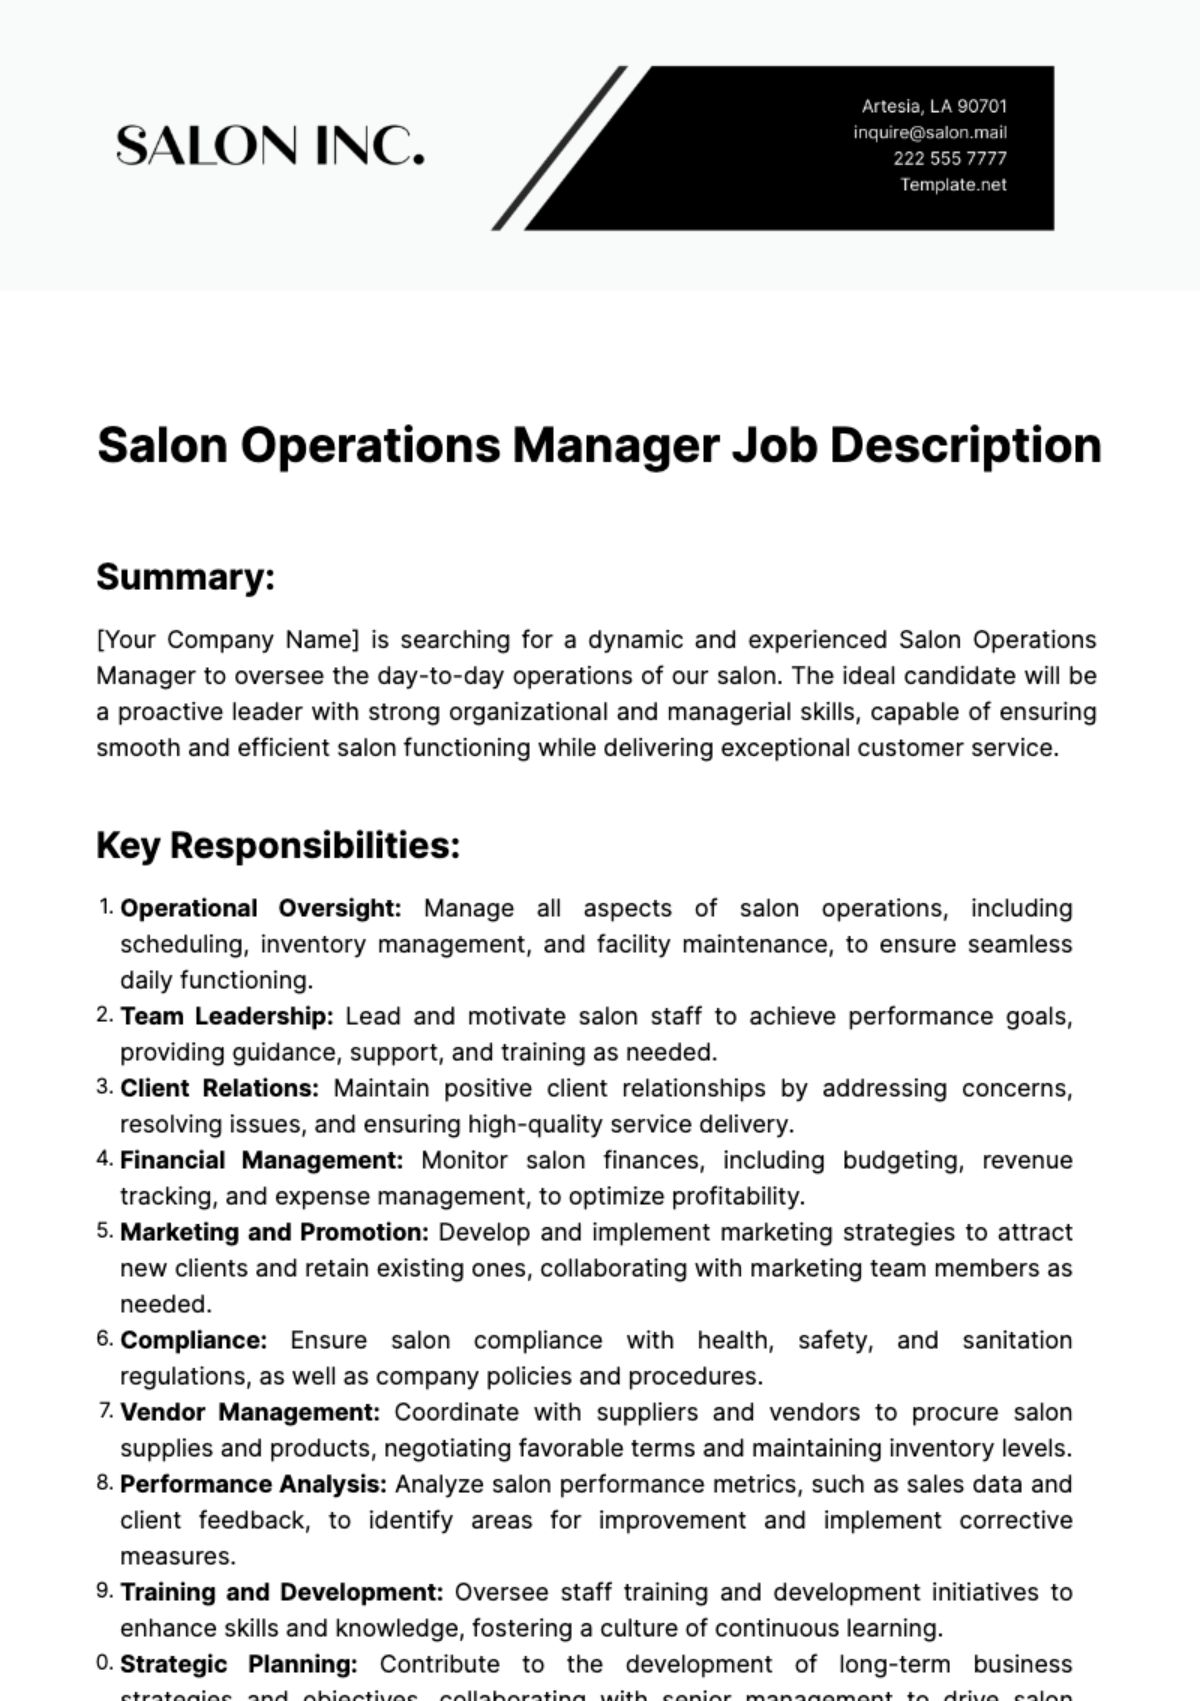 Salon Operations Manager Job Description Template